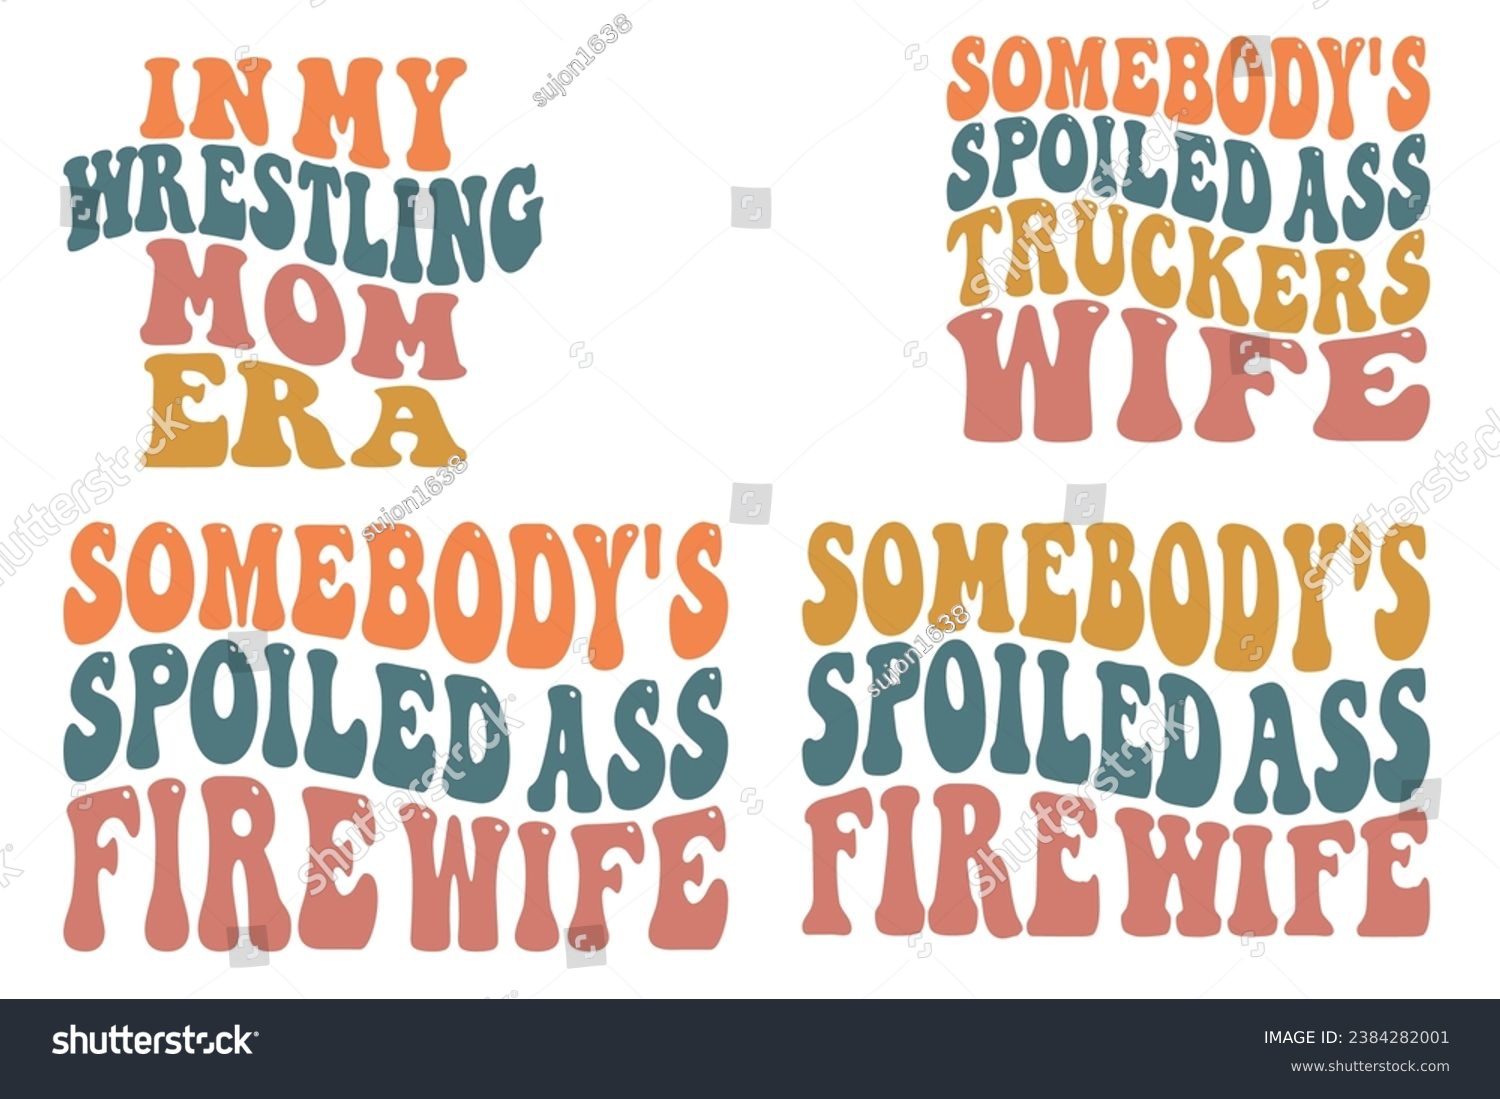 SVG of In My Wrestling Mom Era, Somebody's Spoiled Ass Truckers Wife, Somebody's Spoiled Ass Fire Wife retro wavy t-shirt designs svg